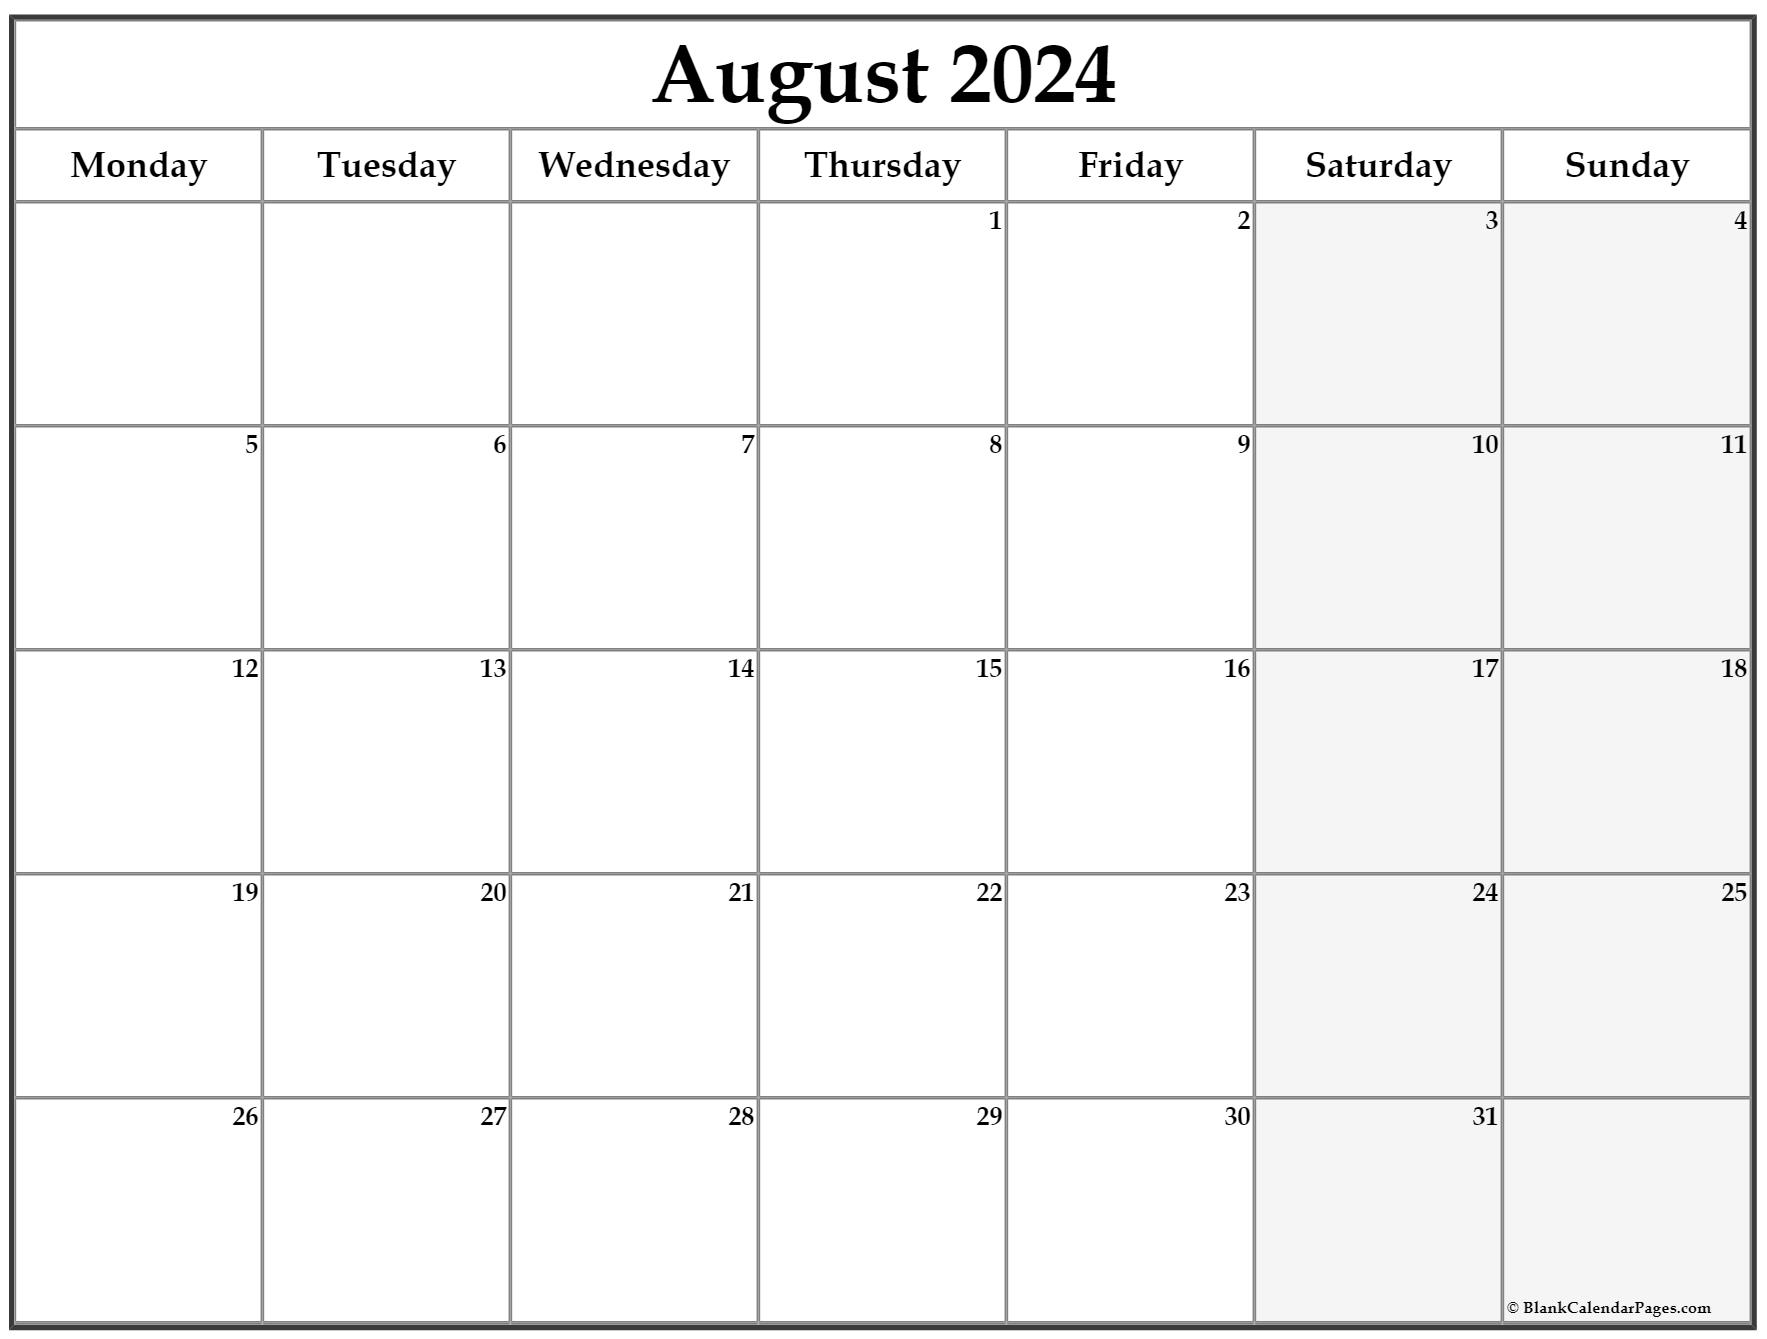 august-2020-monday-calendar-monday-to-sunday